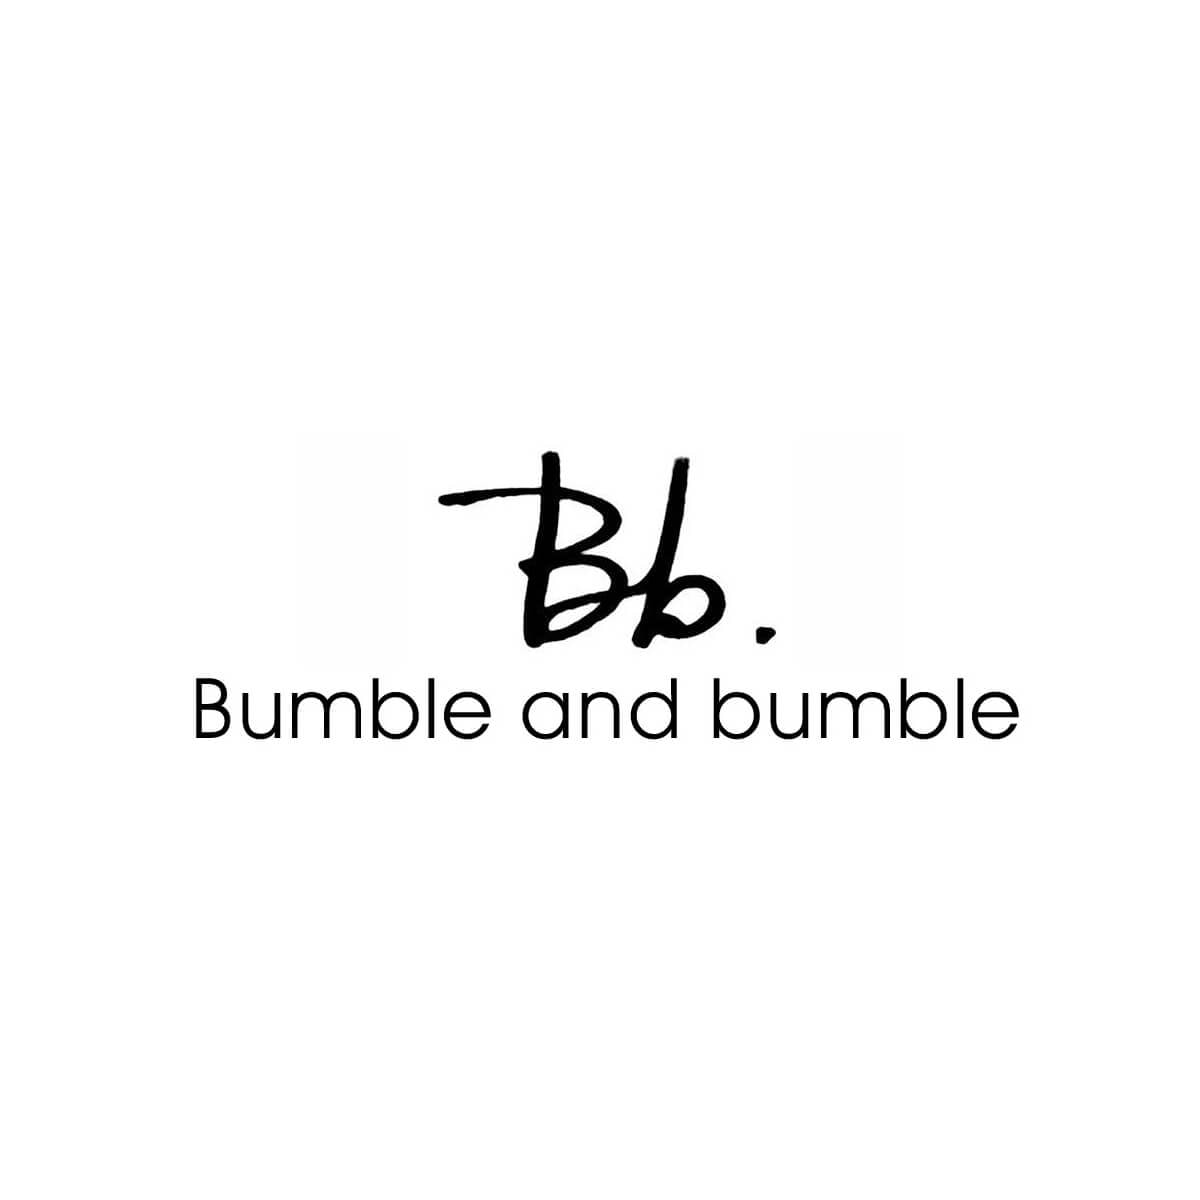 Hair Product Bumble and Bumble logo